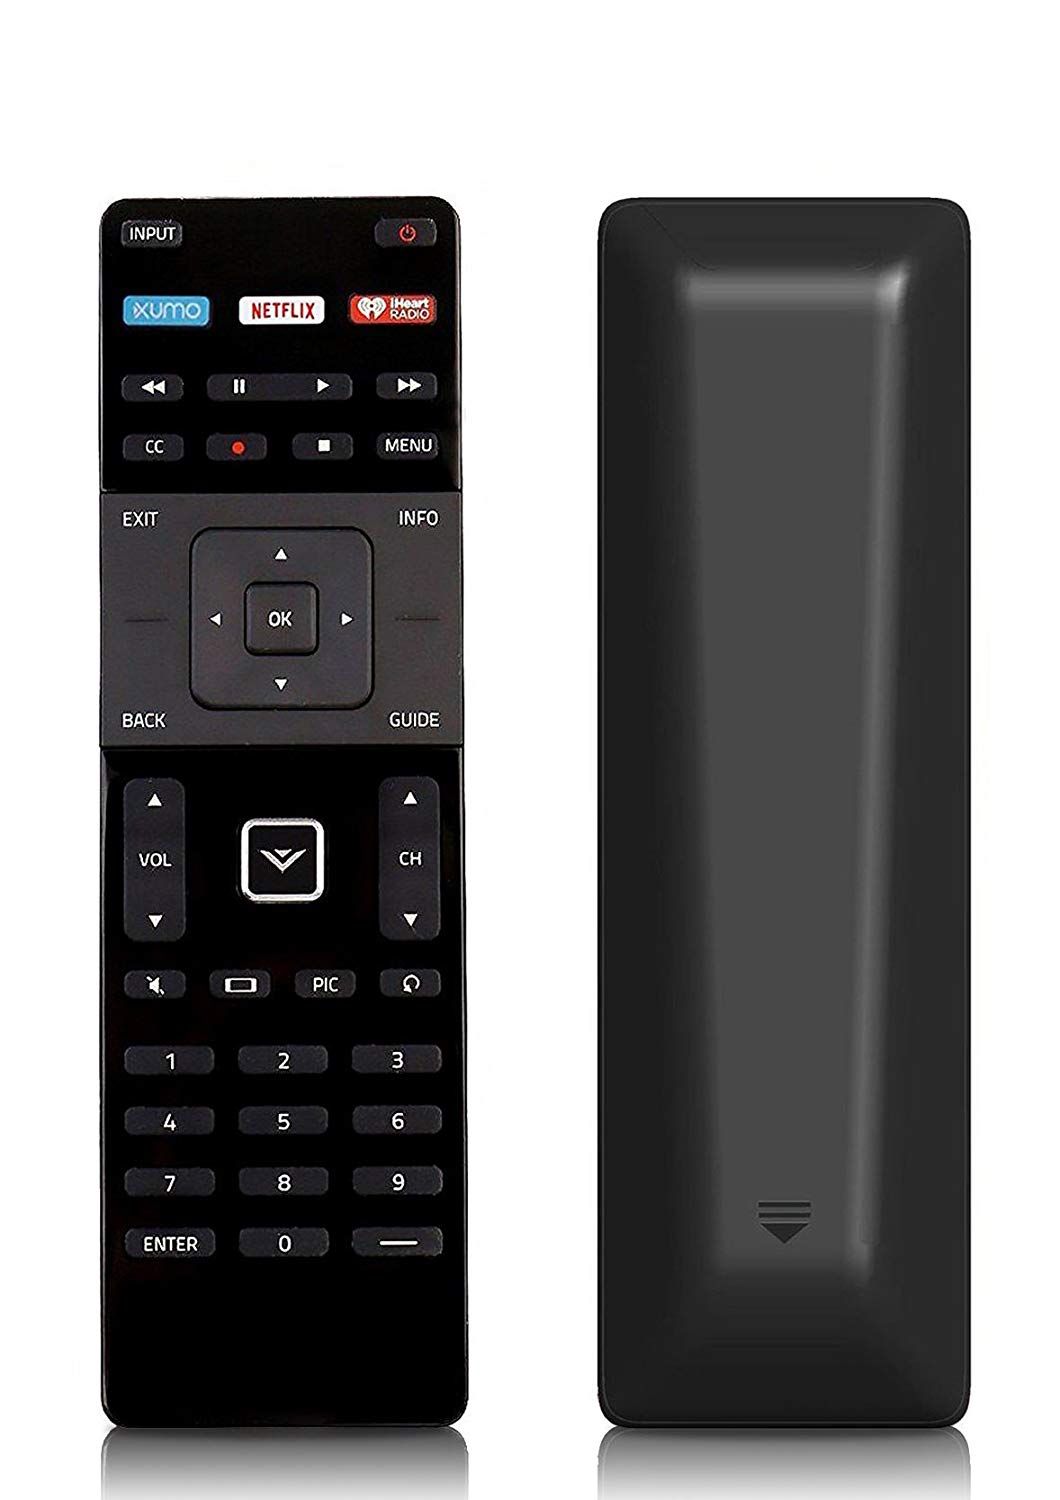 VIZIO XRT122 TV Remote Control with XUMO Short Key